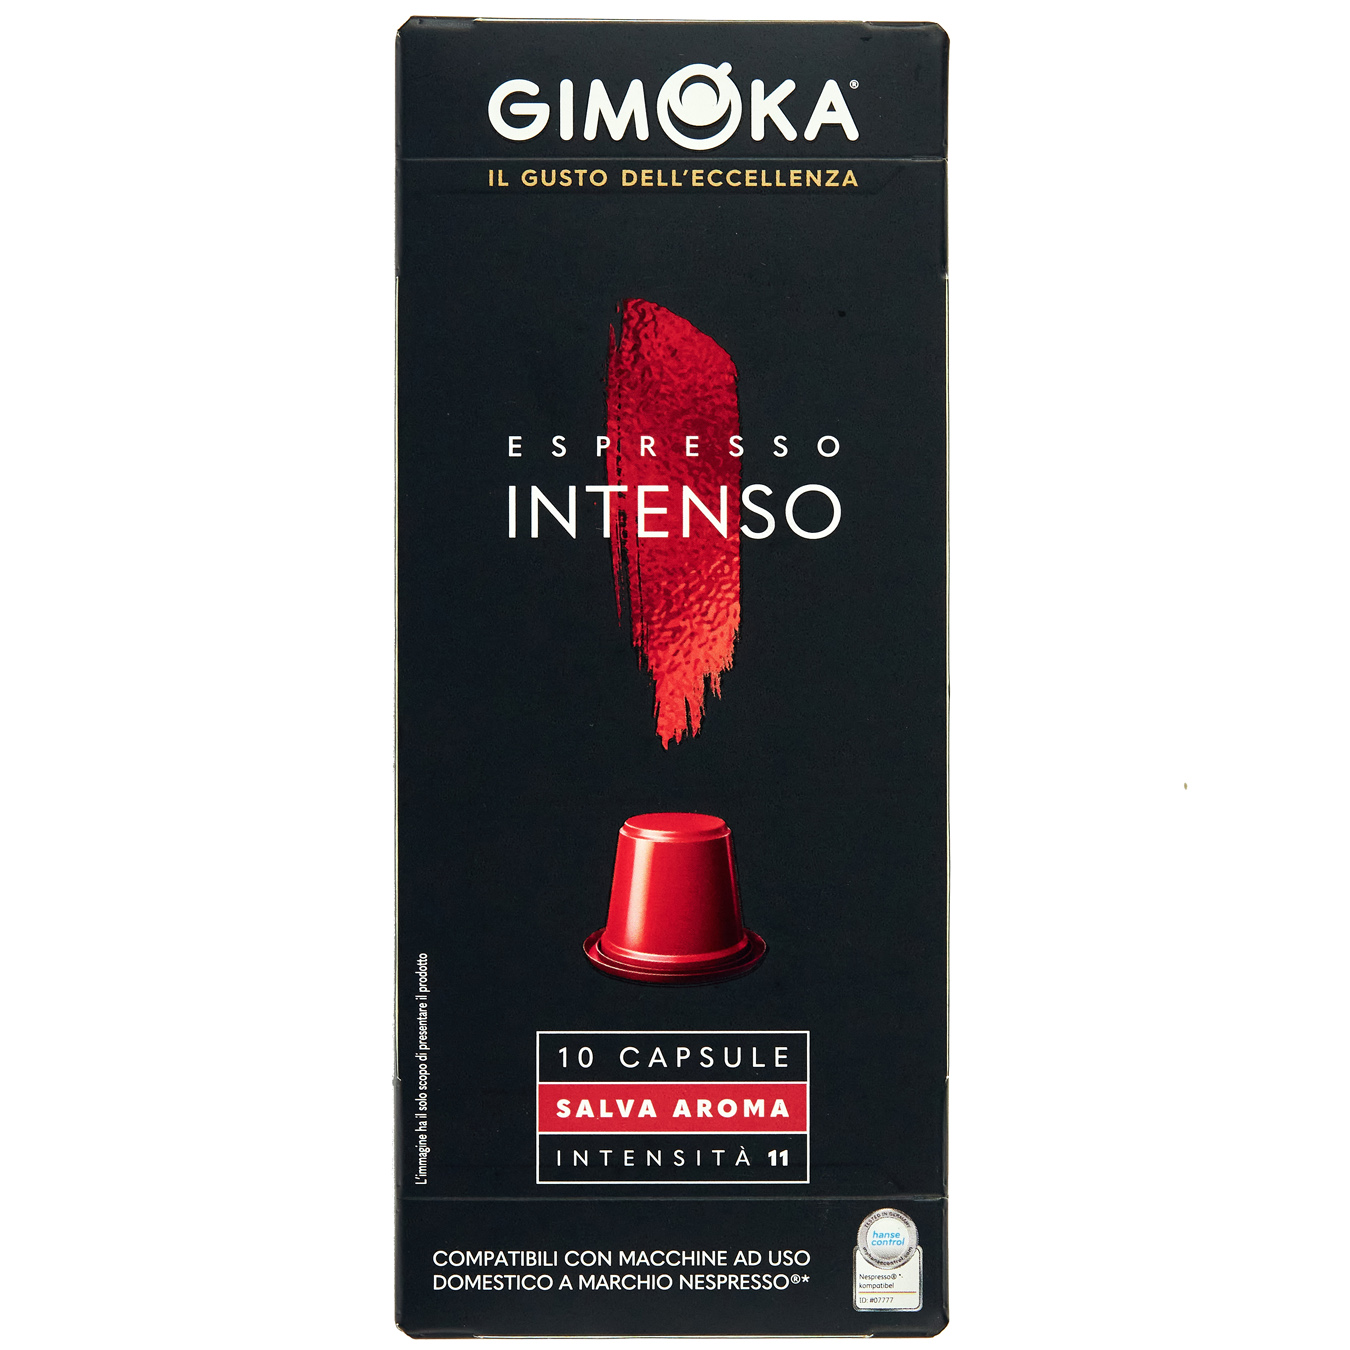 Gimoka intenso ground coffee capsule 10pcs*55g